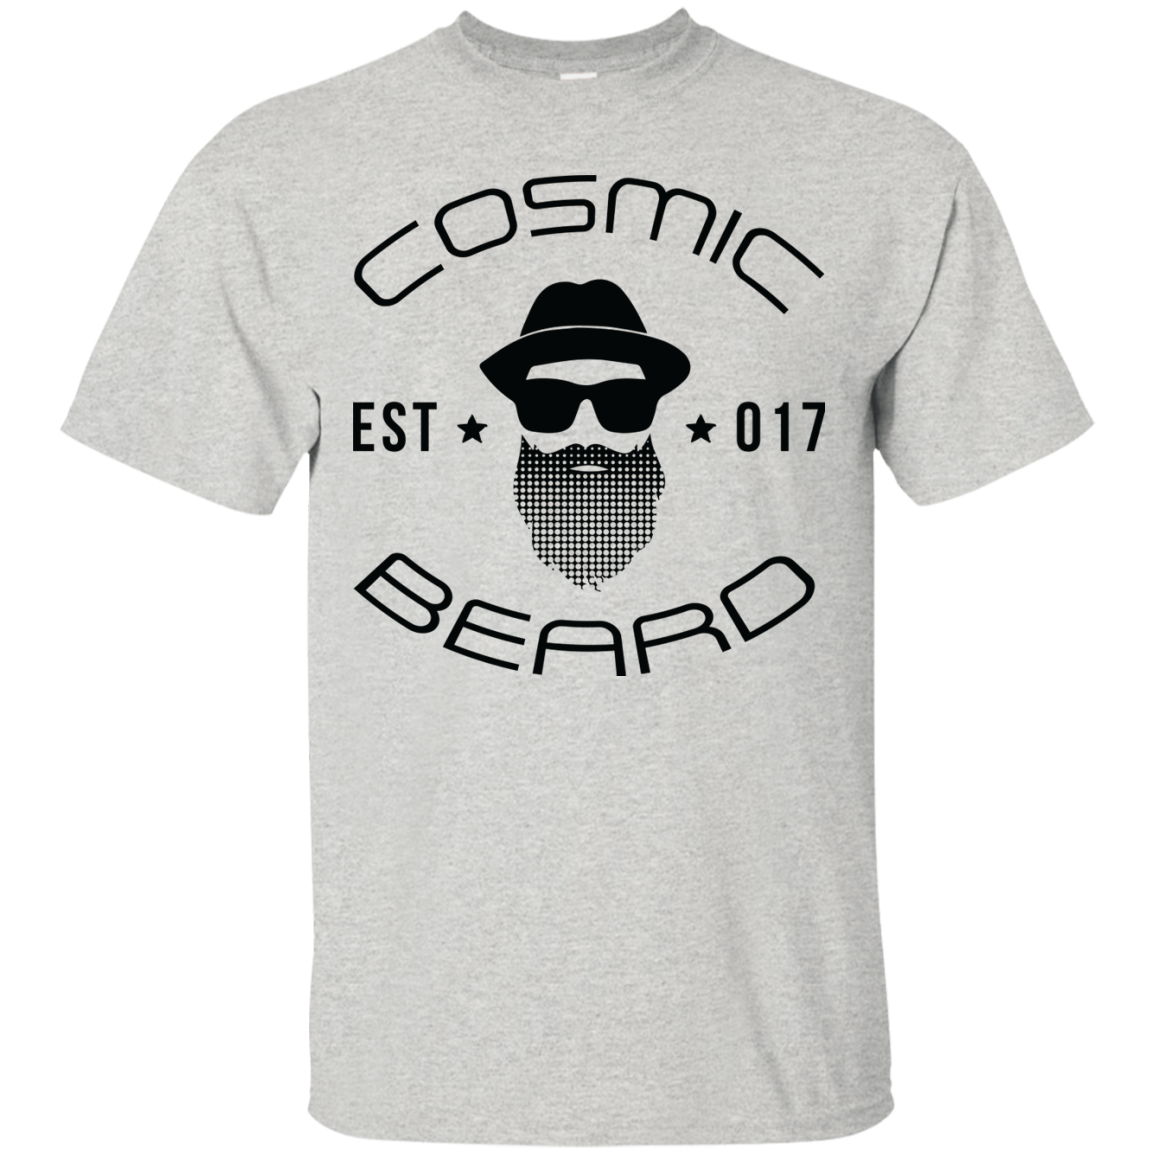 Cosmic Beard Branded T-Shirt with Black Logo